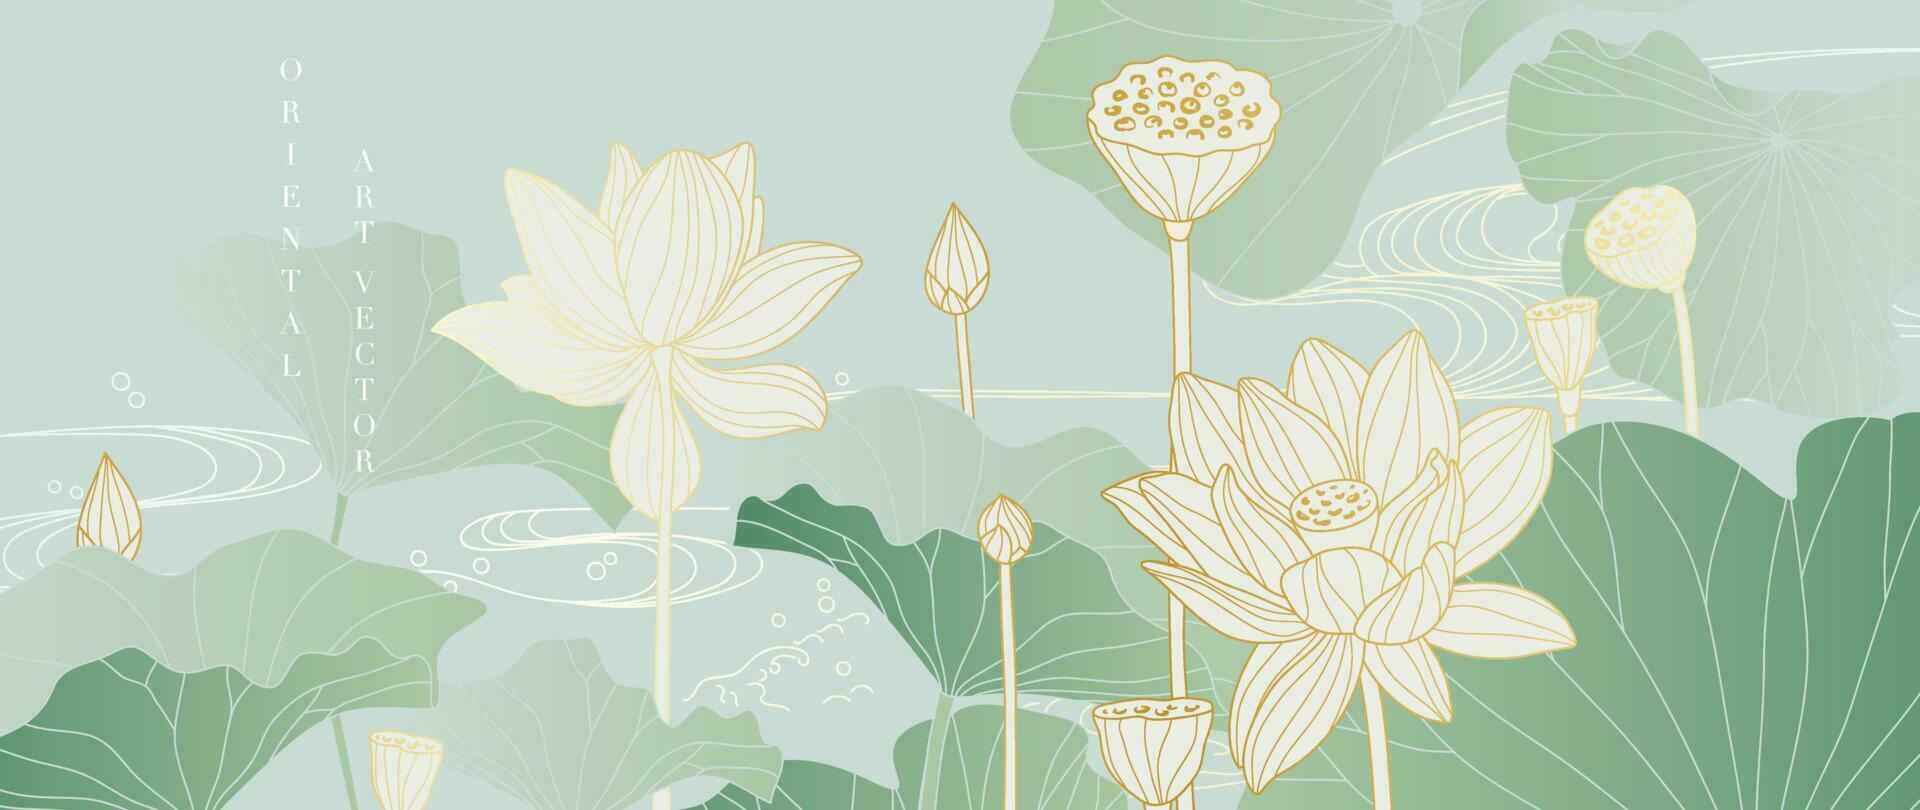 lyx orientalisk blomma bakgrund vektor. elegant vit lotus blommor gyllene linje konst, löv, lutning Färg. japansk och kinesisk illustration design för dekor, tapet, affisch, baner, kort. vektor